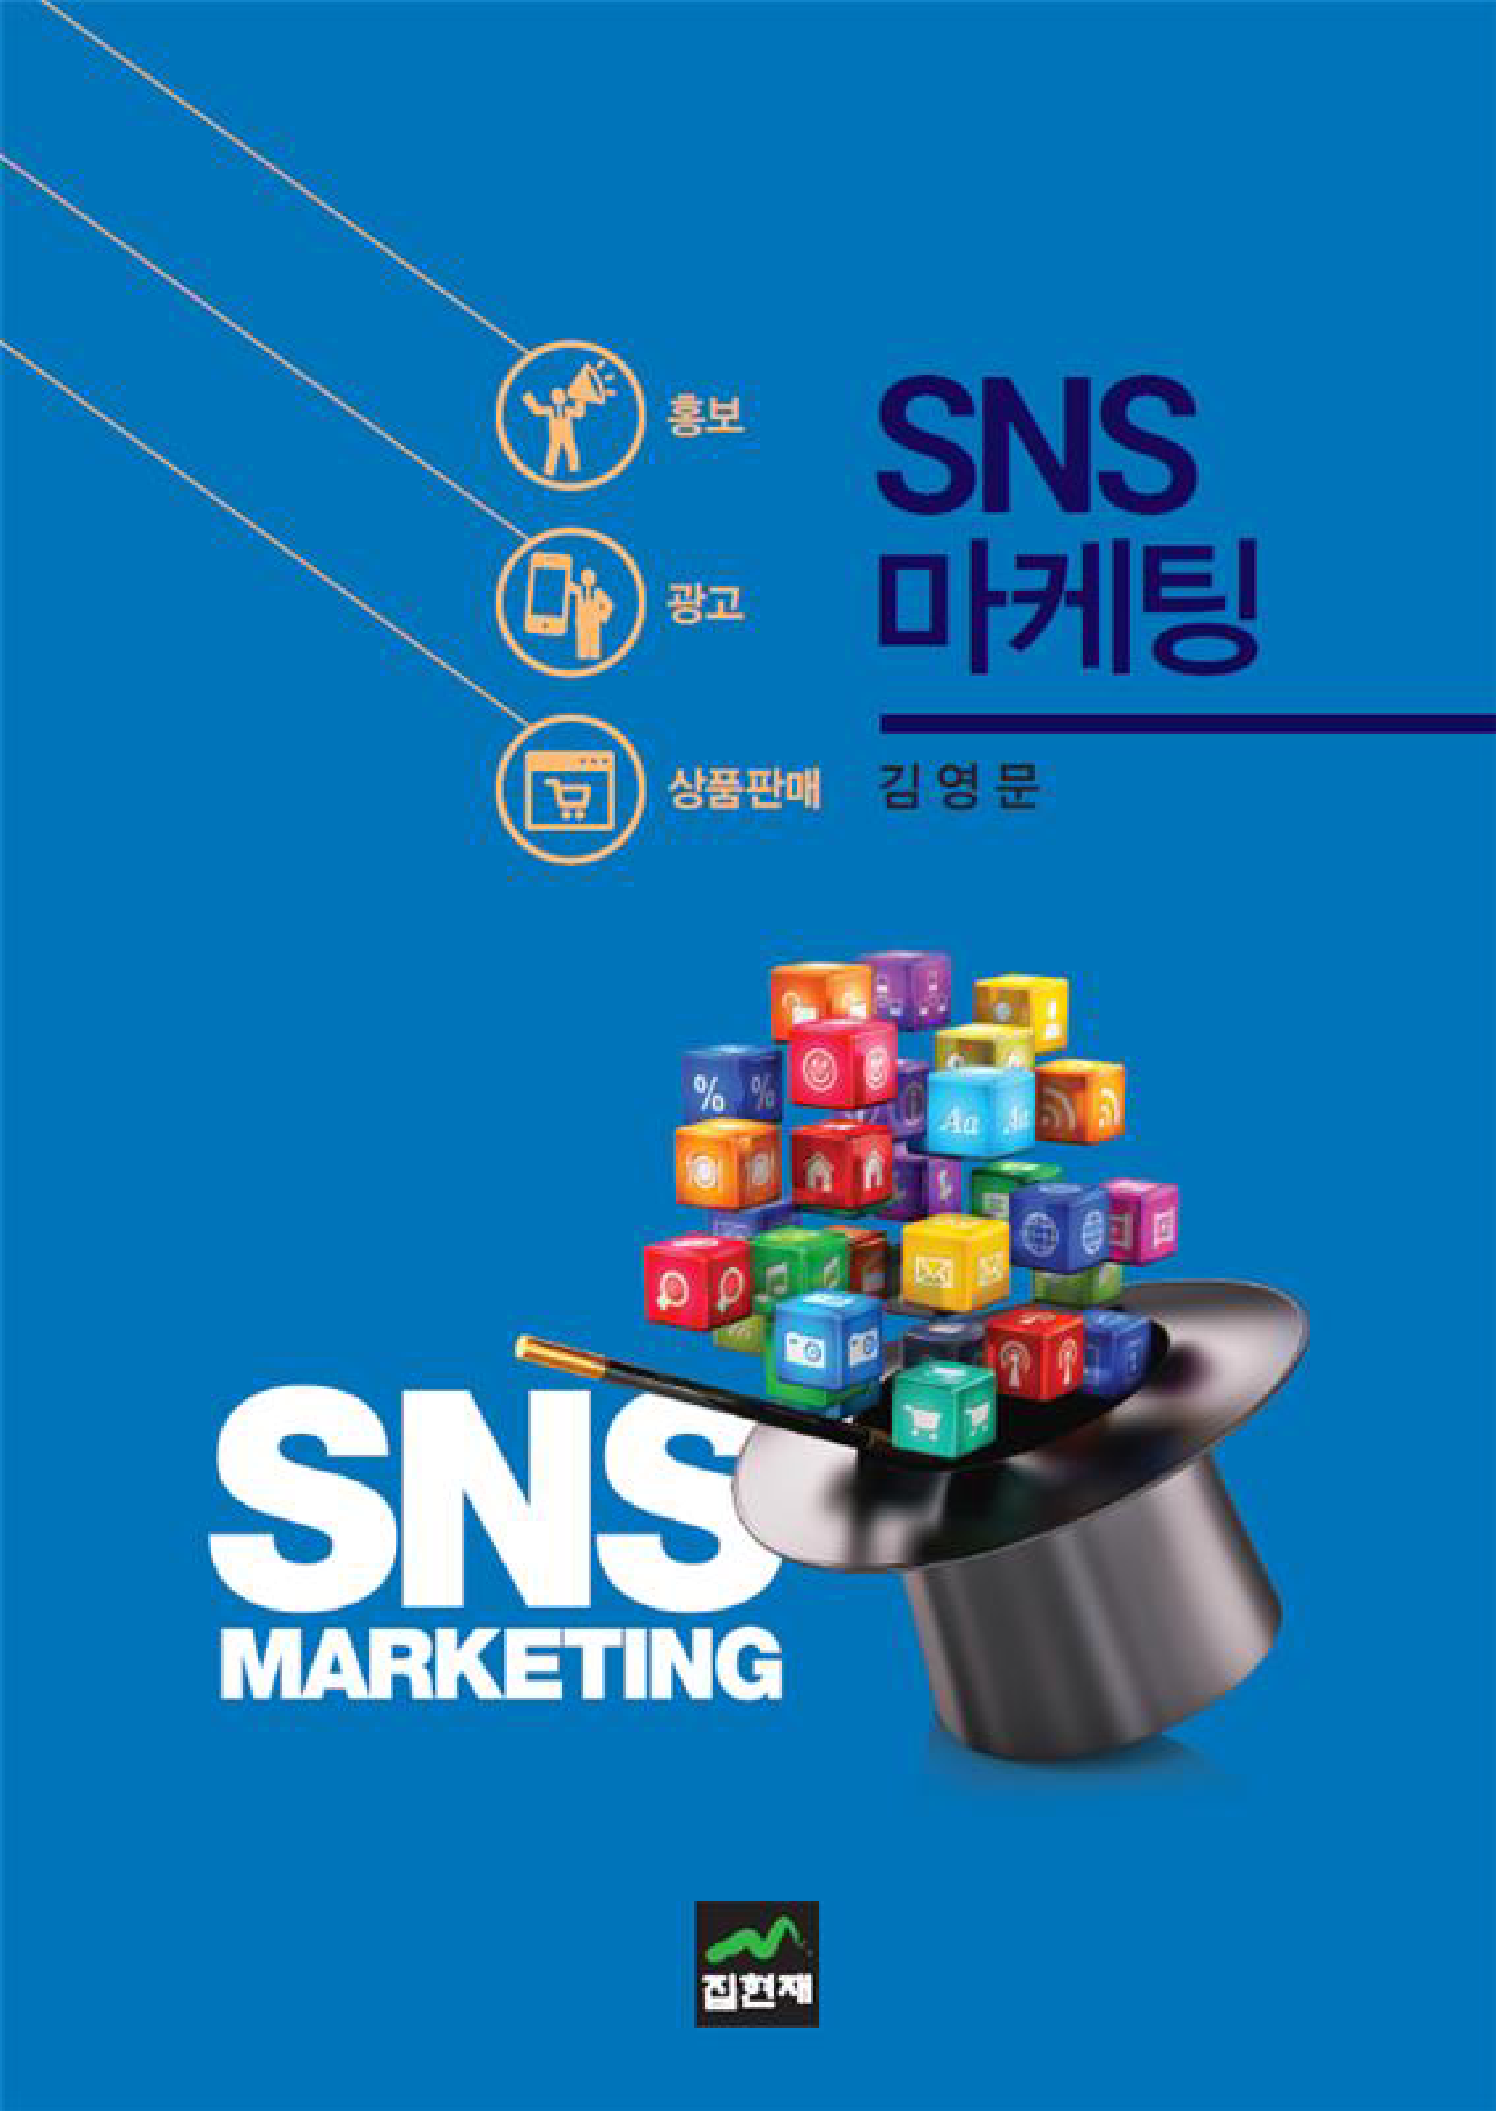 SNS 마케팅 (홍보/광고/상품판매)